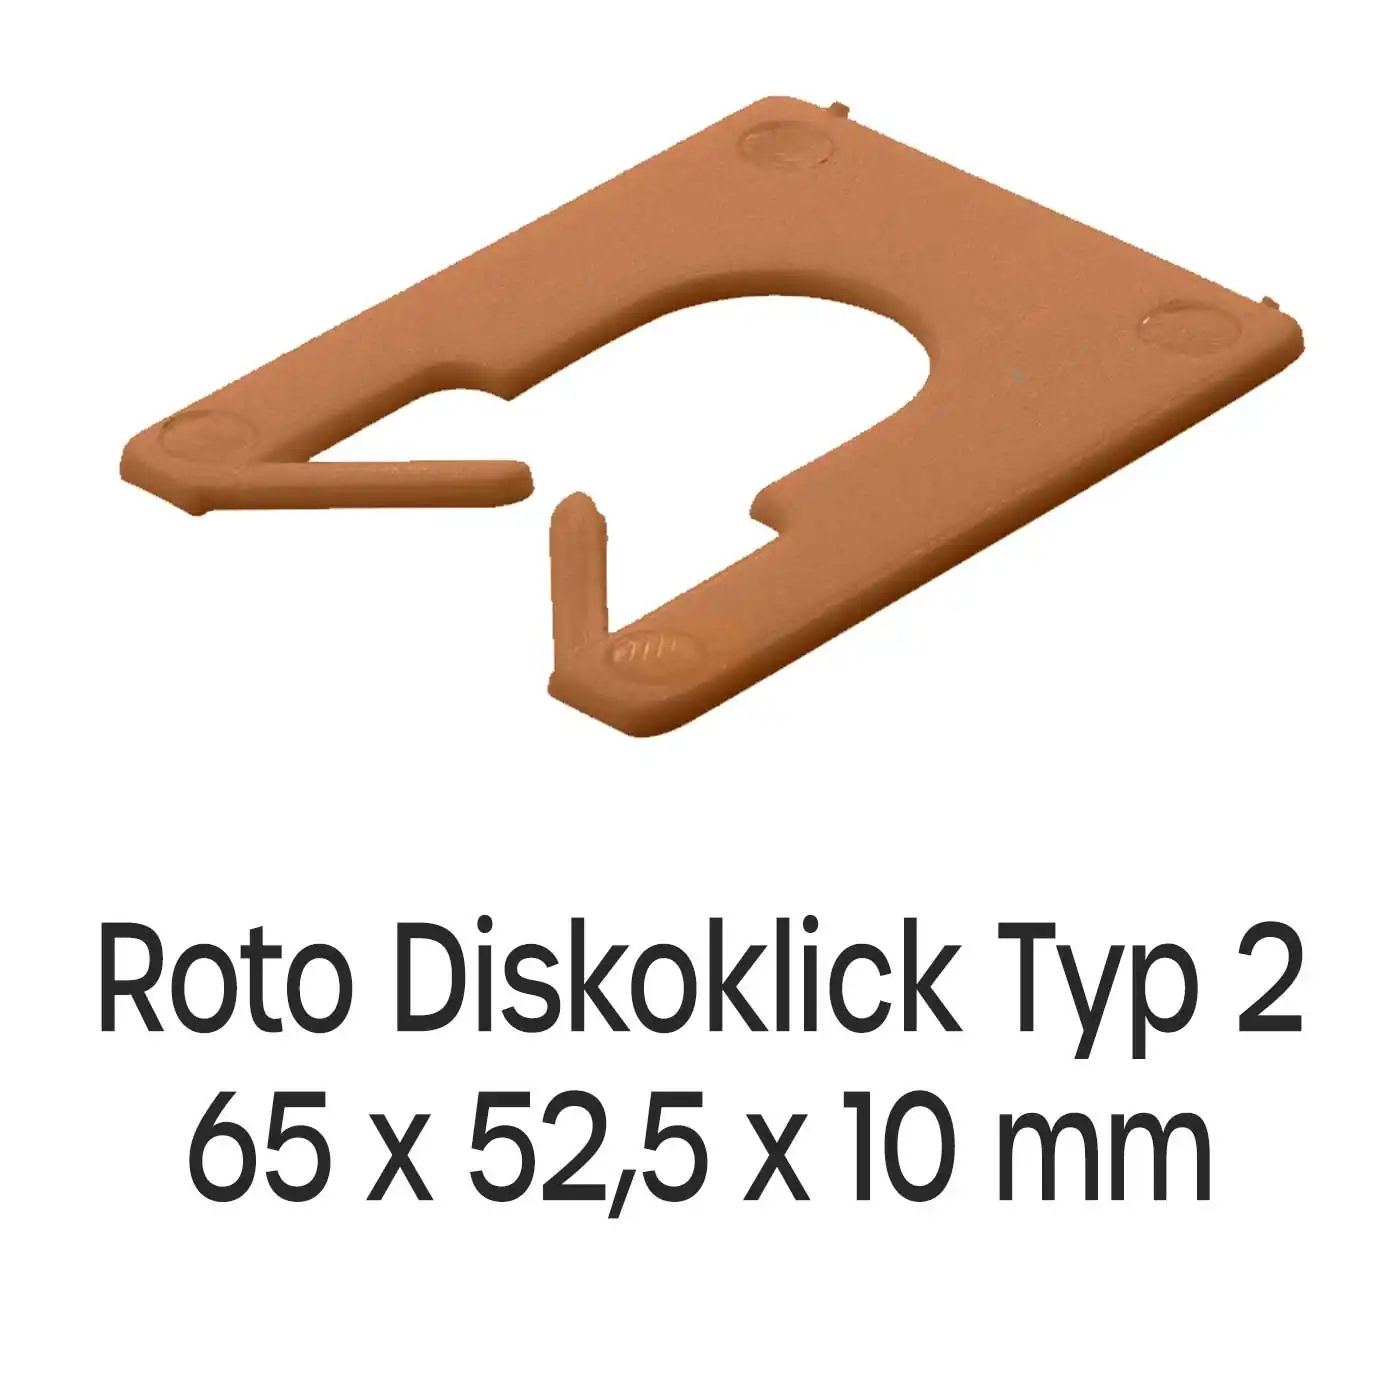 Distanzplatten Roto Diskoklick Typ 2 65 x 52,5 x 10 mm 500 Stück